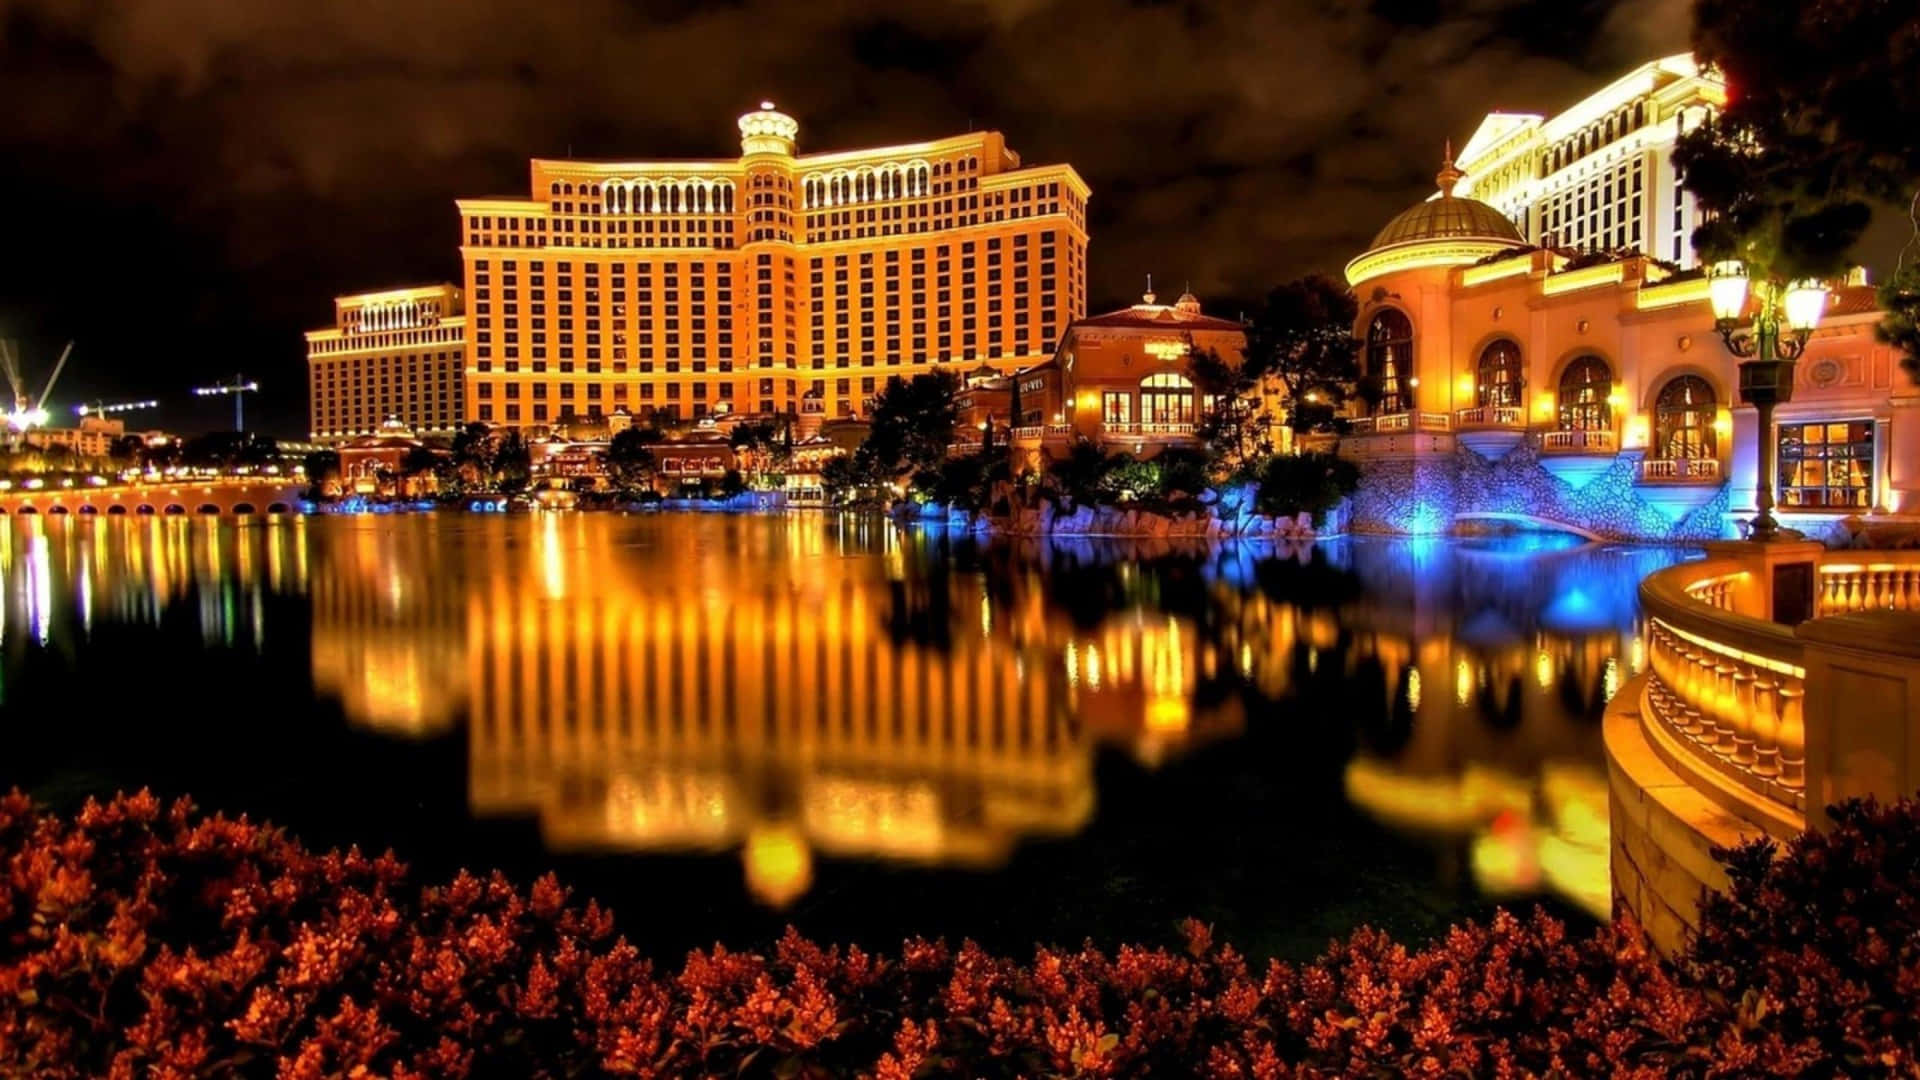 The Bellagio Hotel And Casino At Night Wallpaper